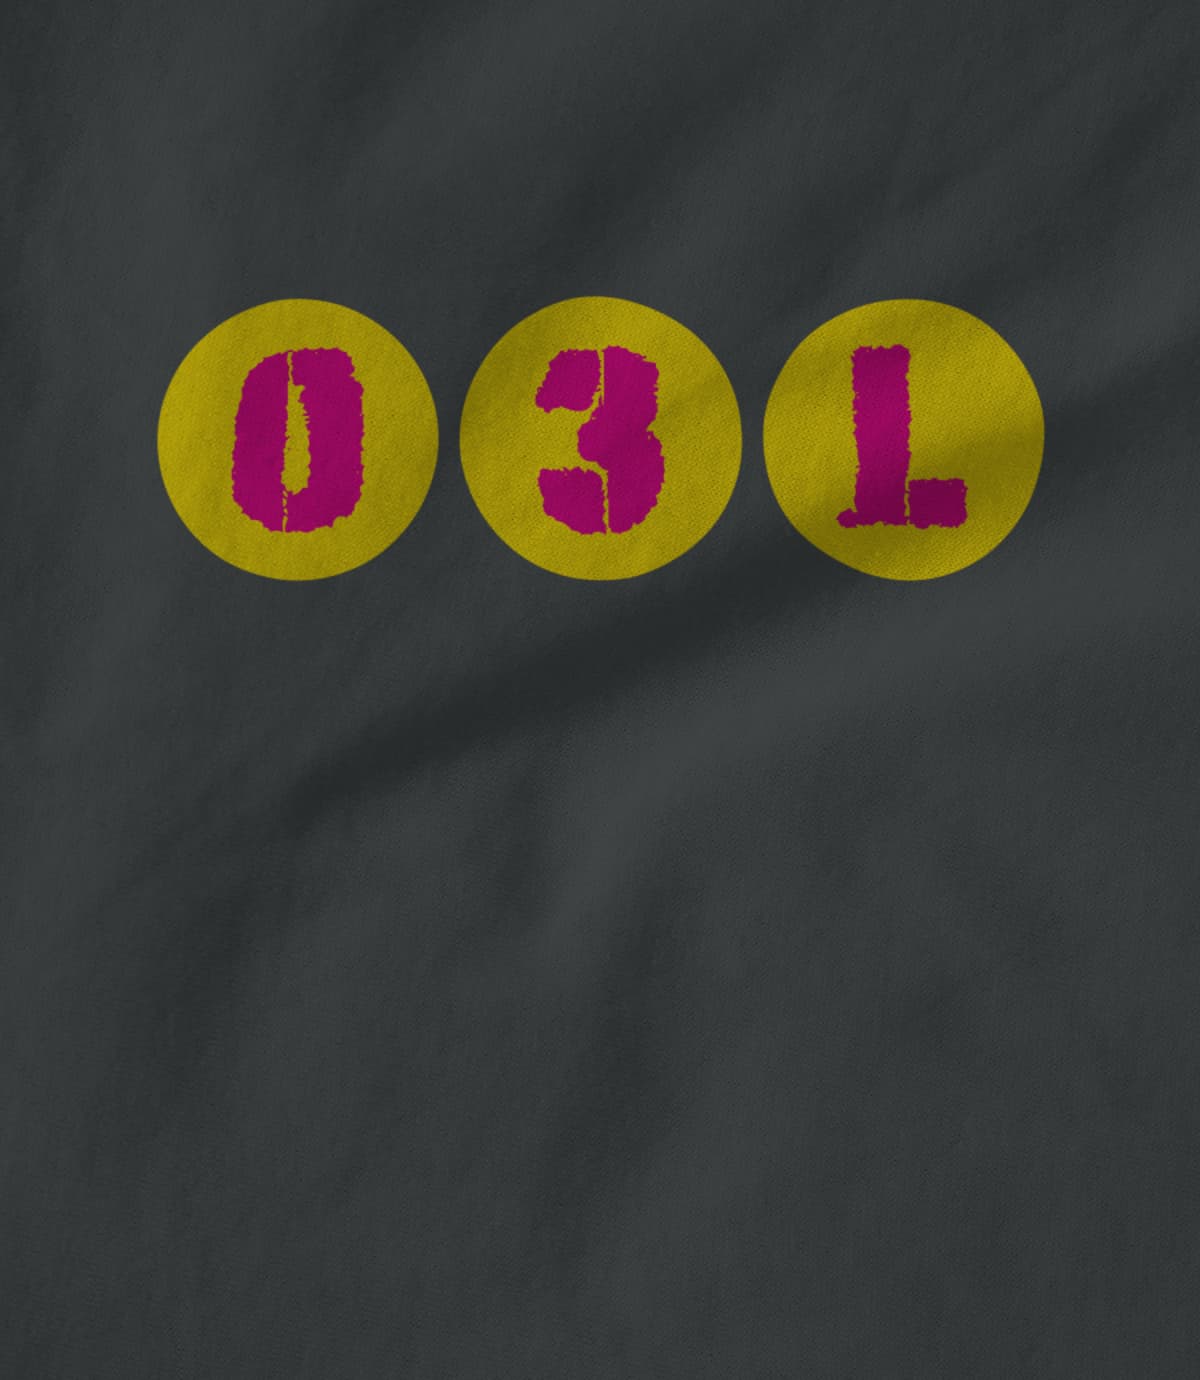 Only three lads o3l podcast   logo design 2  asphalt  1579509236